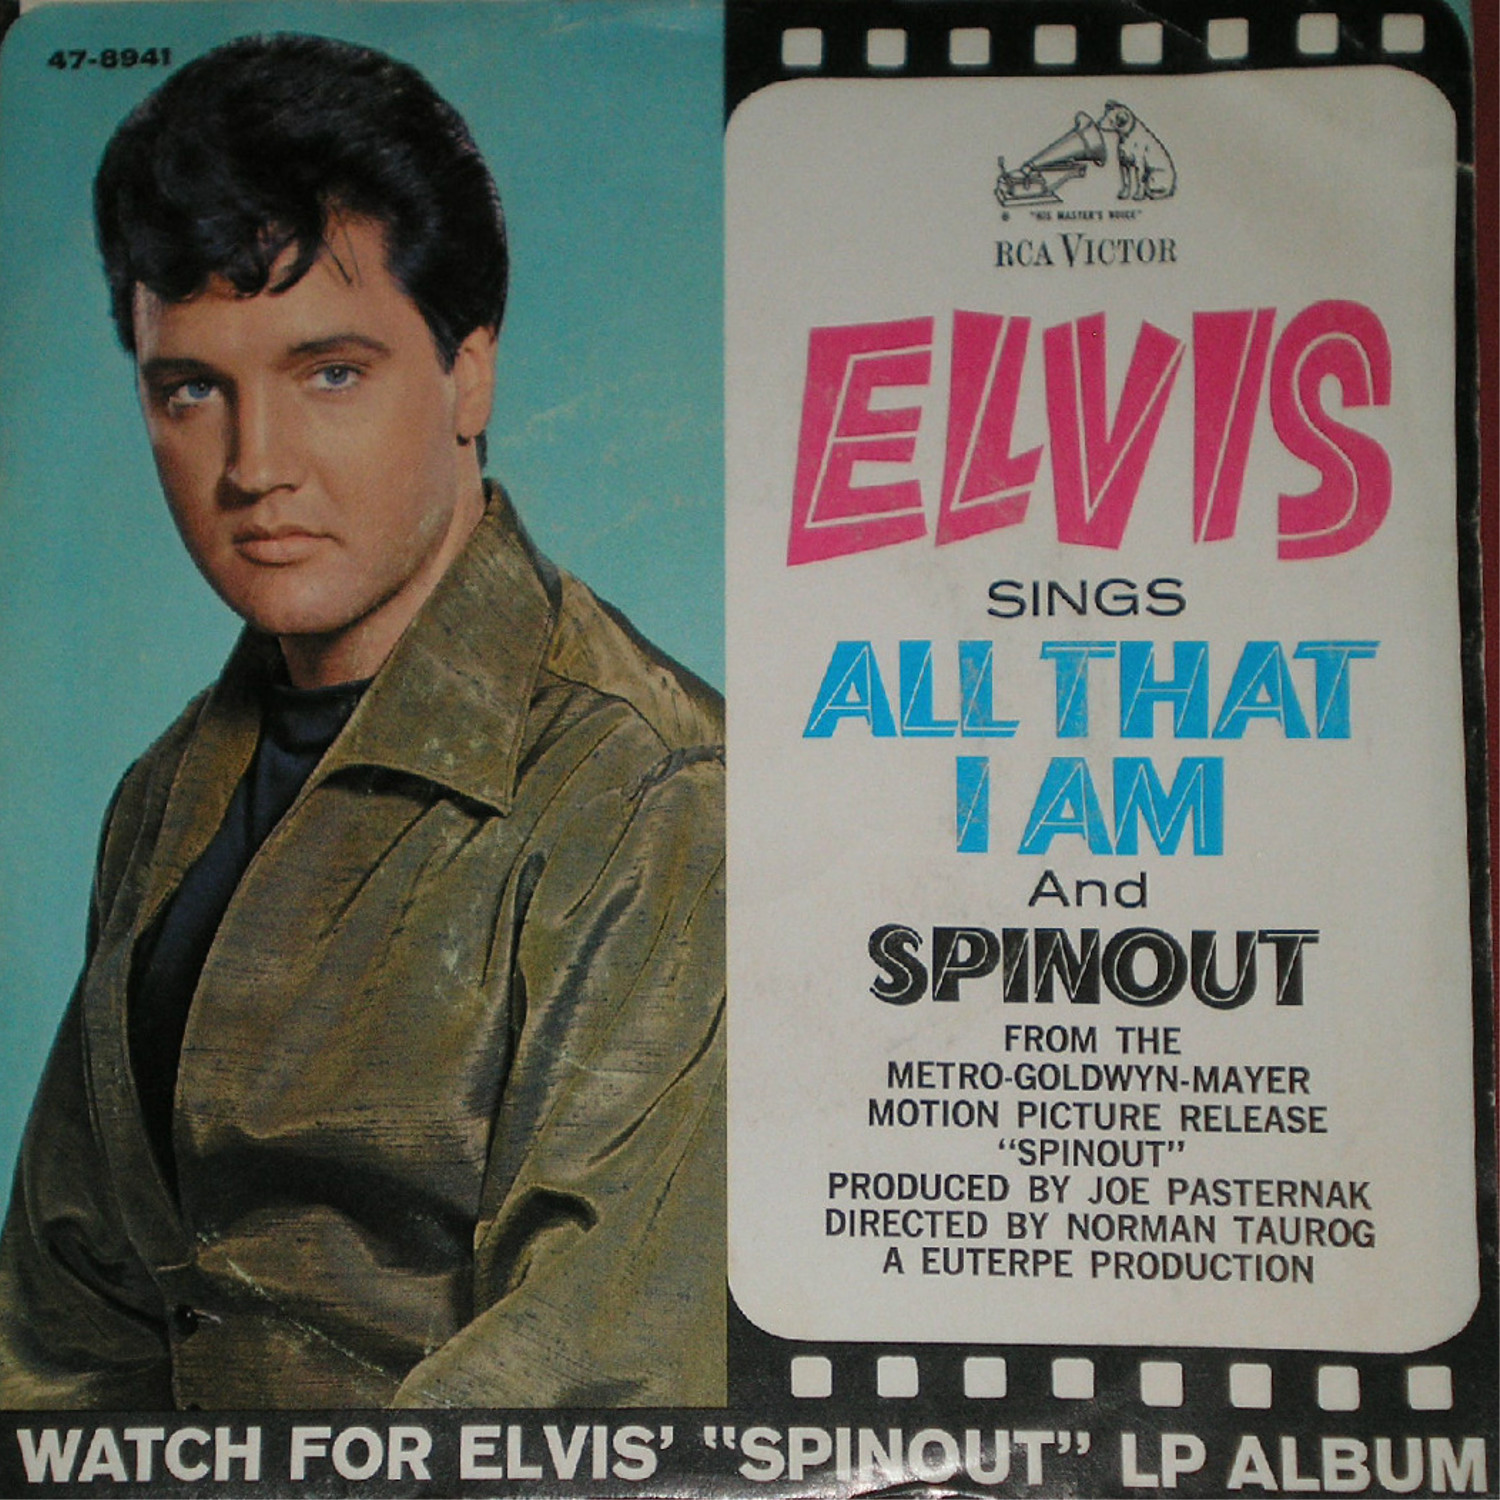 Spinout / All That I Am 47-8941bu5k3x